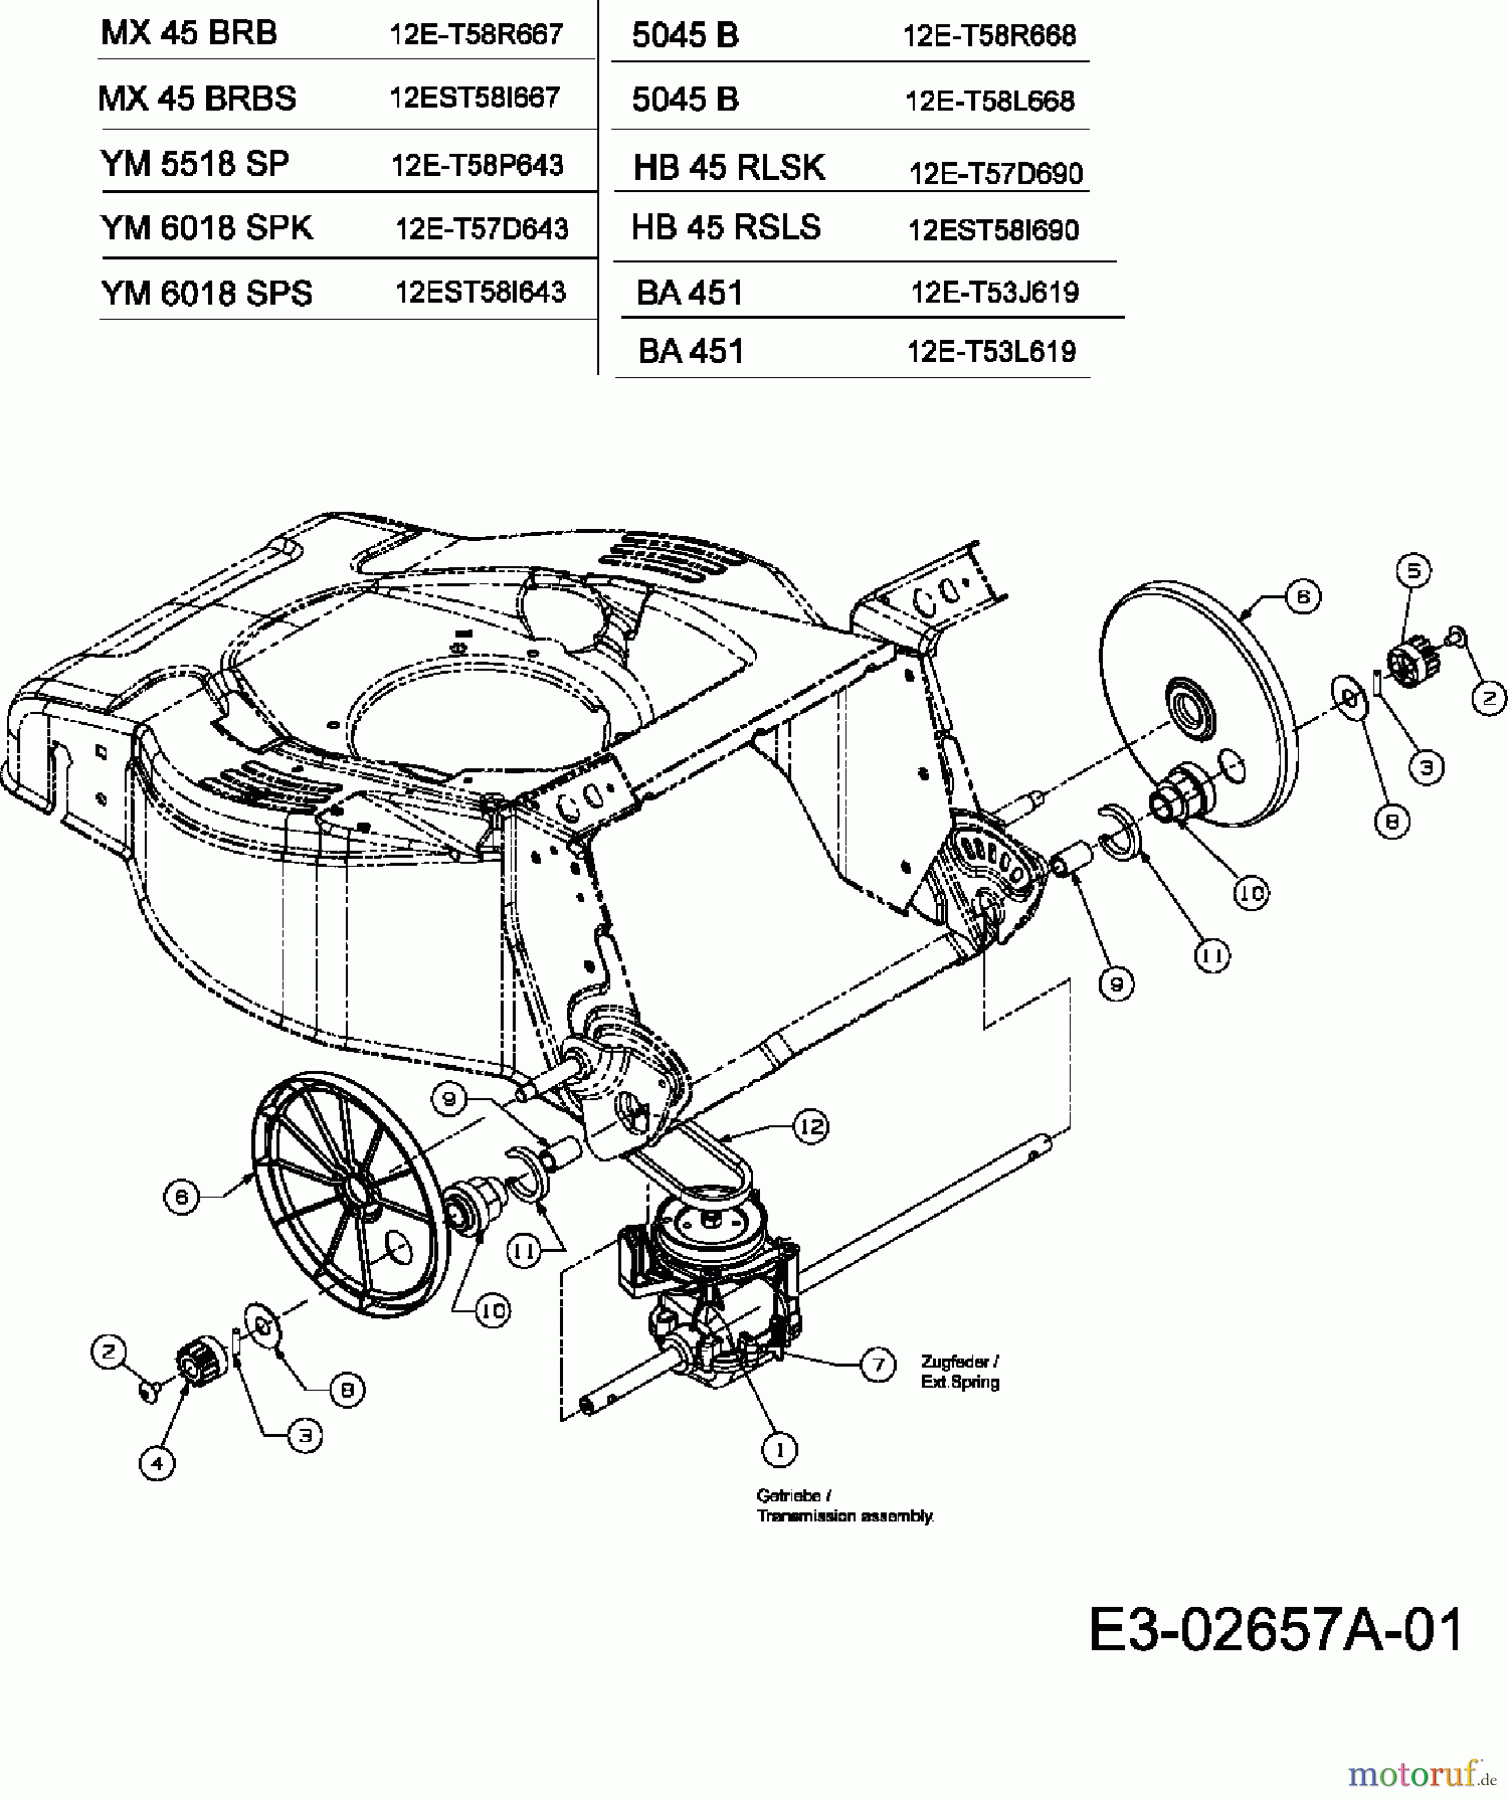  Mac Allister Petrol mower self propelled 5045 B 12E-T58L668  (2006) Gearbox 618-04364